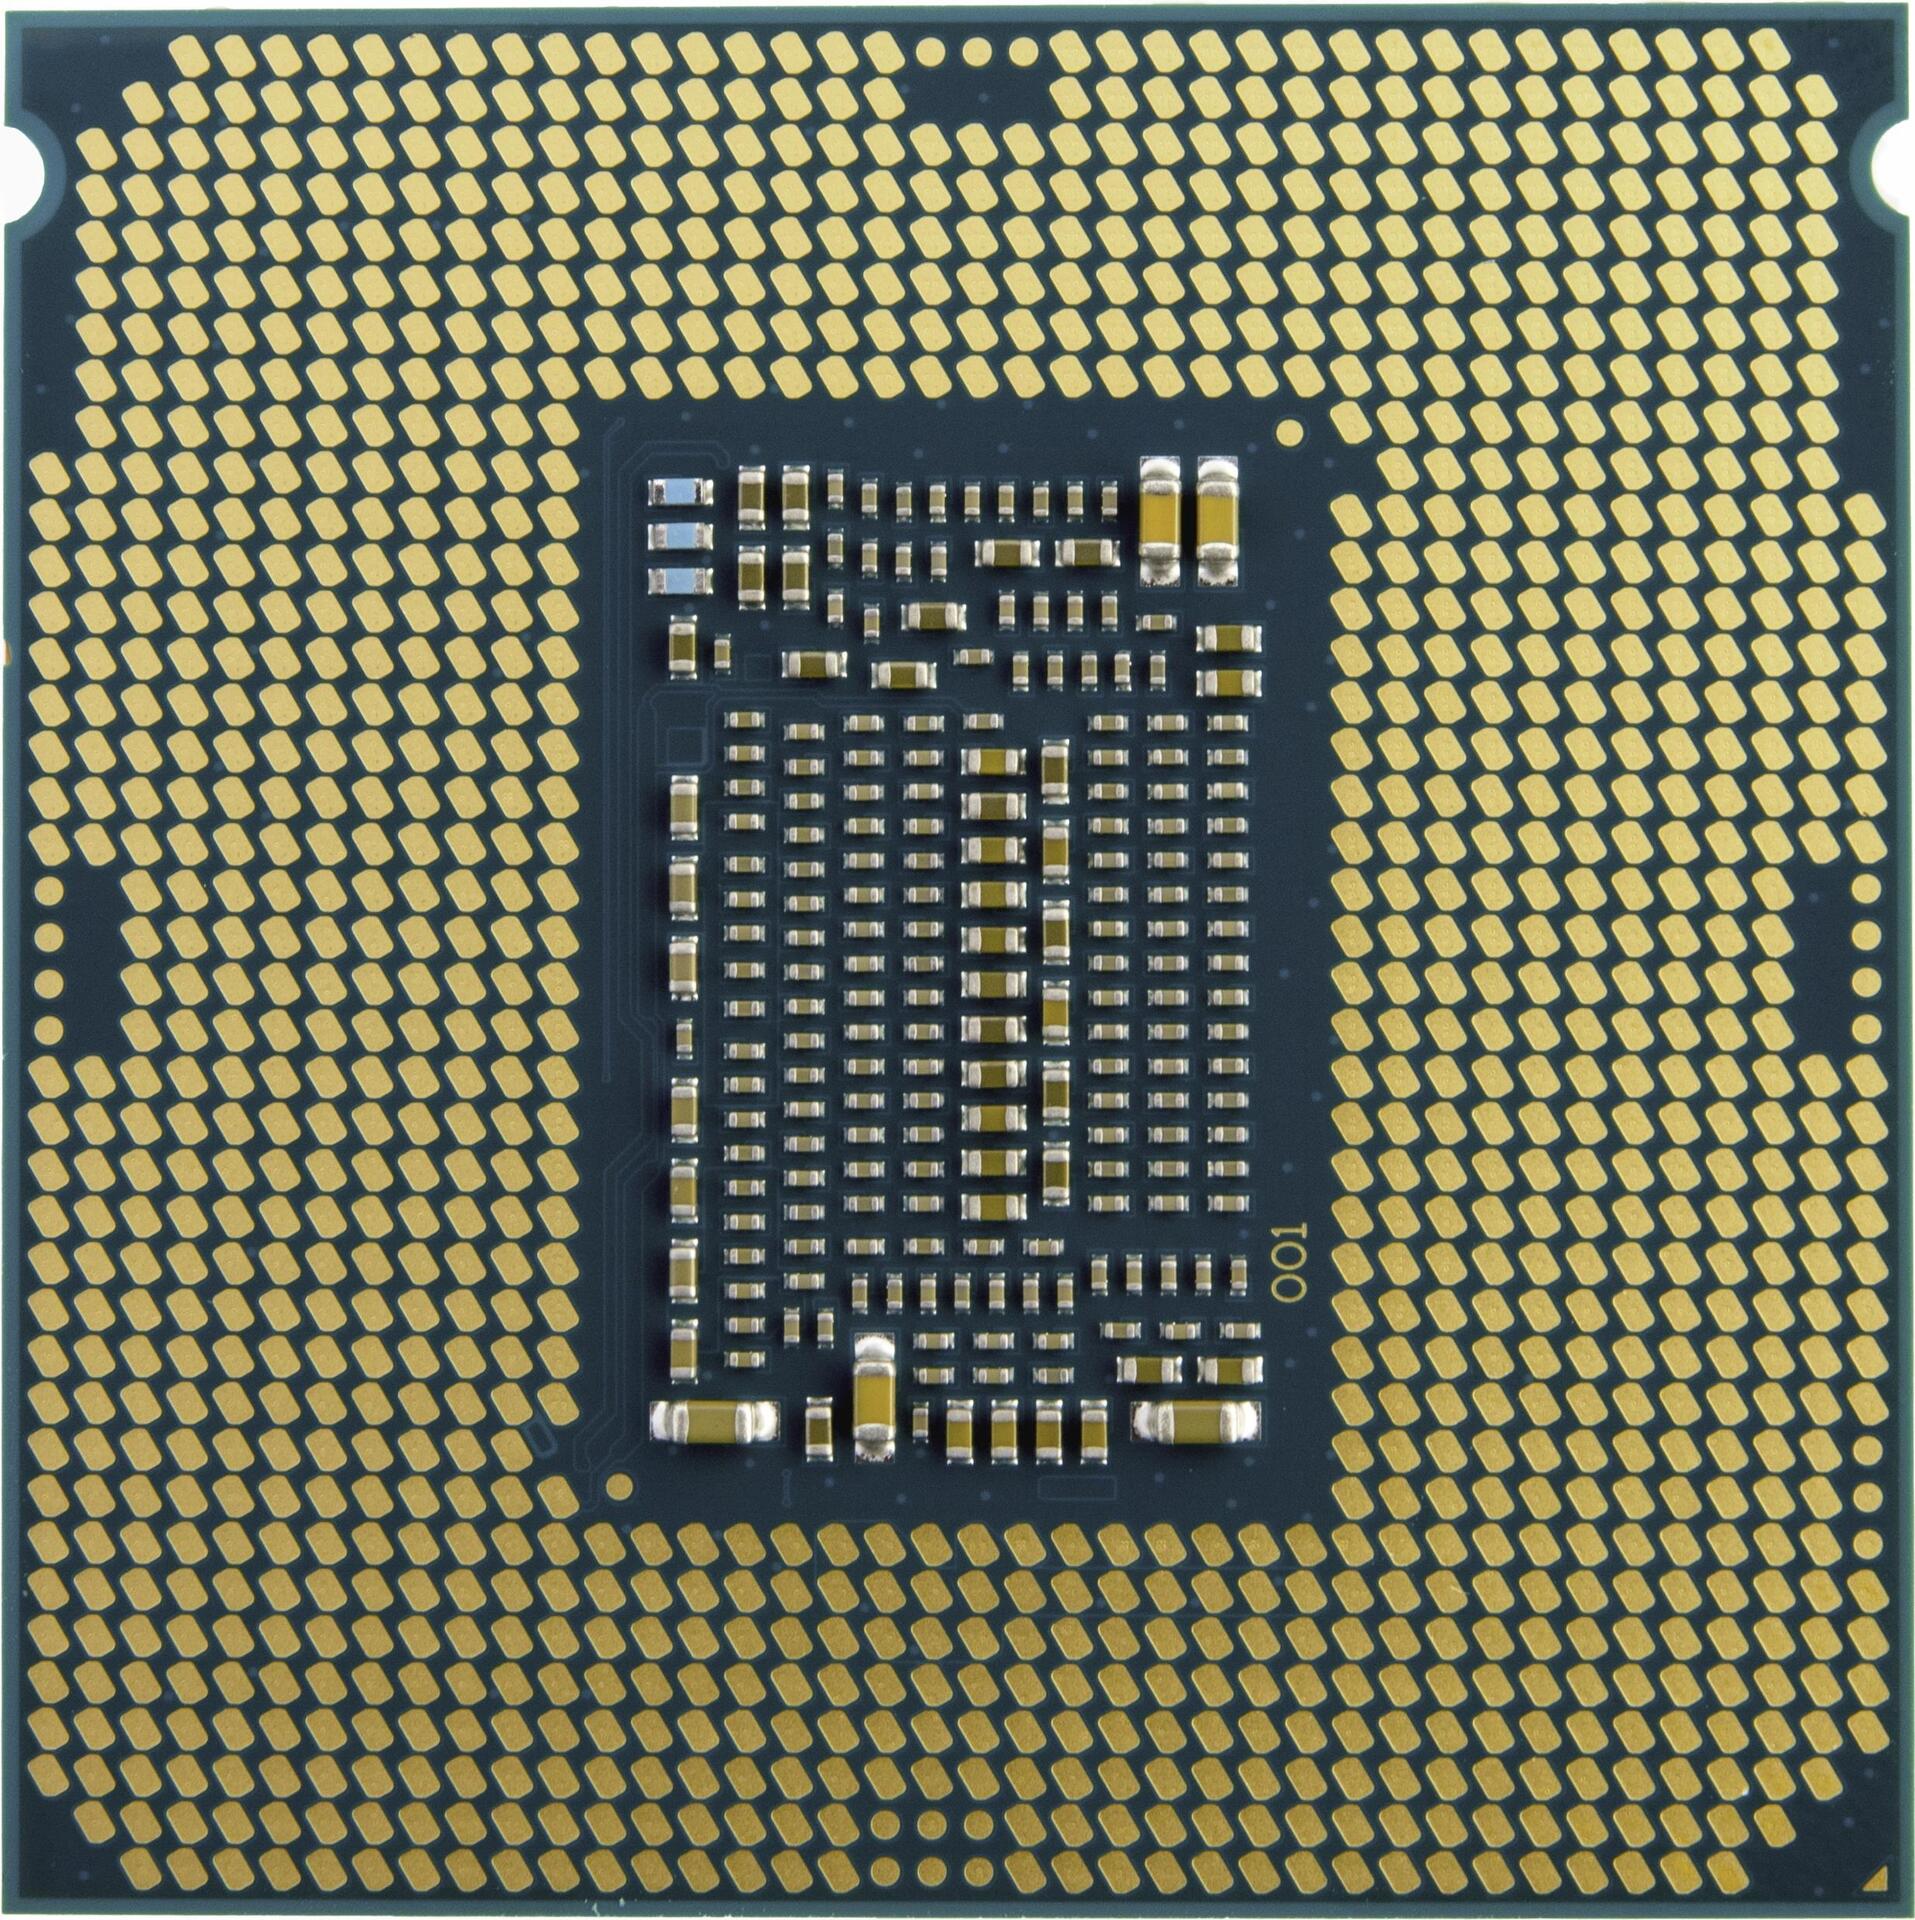 INTEL Xeon Silver 4210R 2.4GHz FC-LGA3647 13.75M Cache Tray CPU